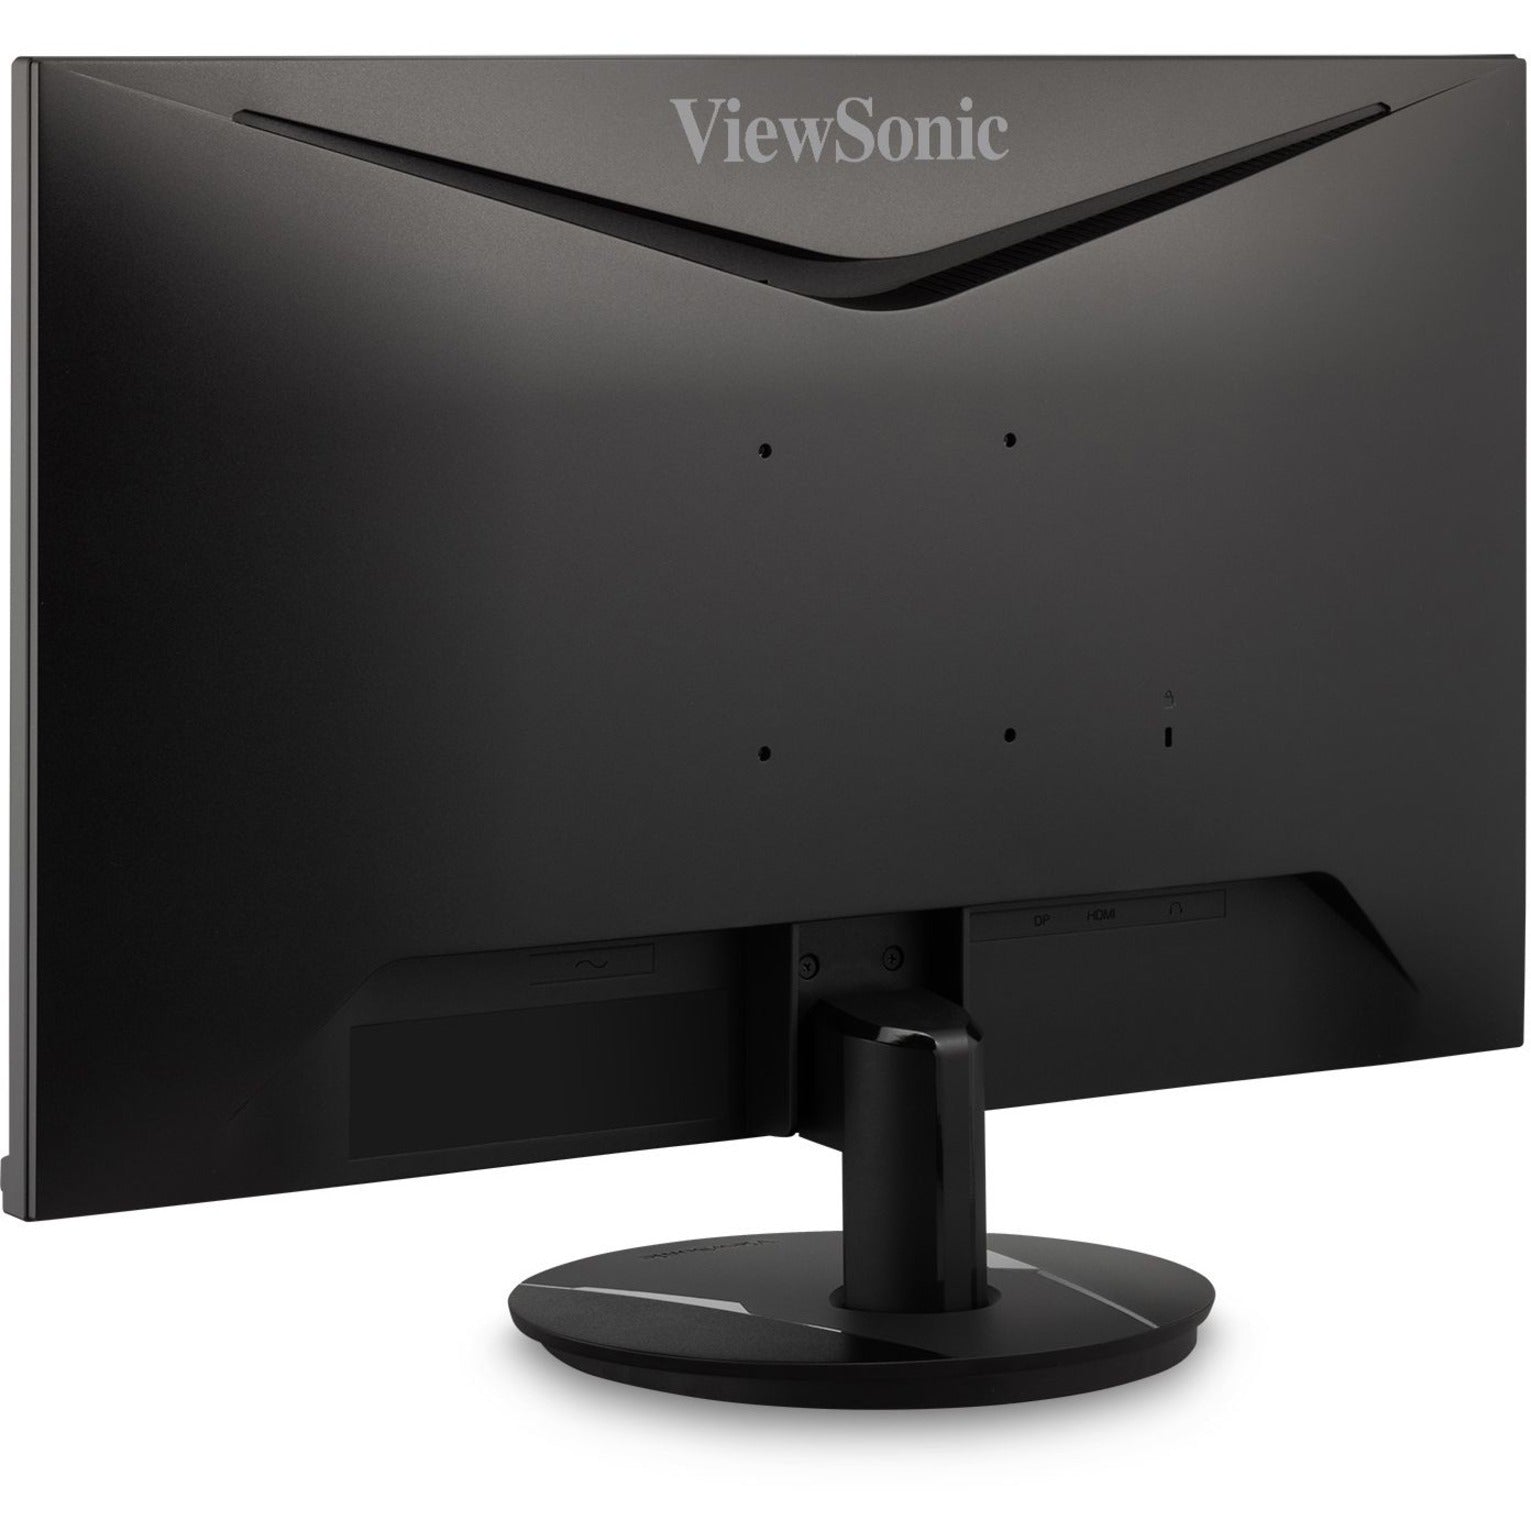 ViewSonic VX2716 27" Gaming Monitor, Full HD, 1ms Response Time, FreeSync